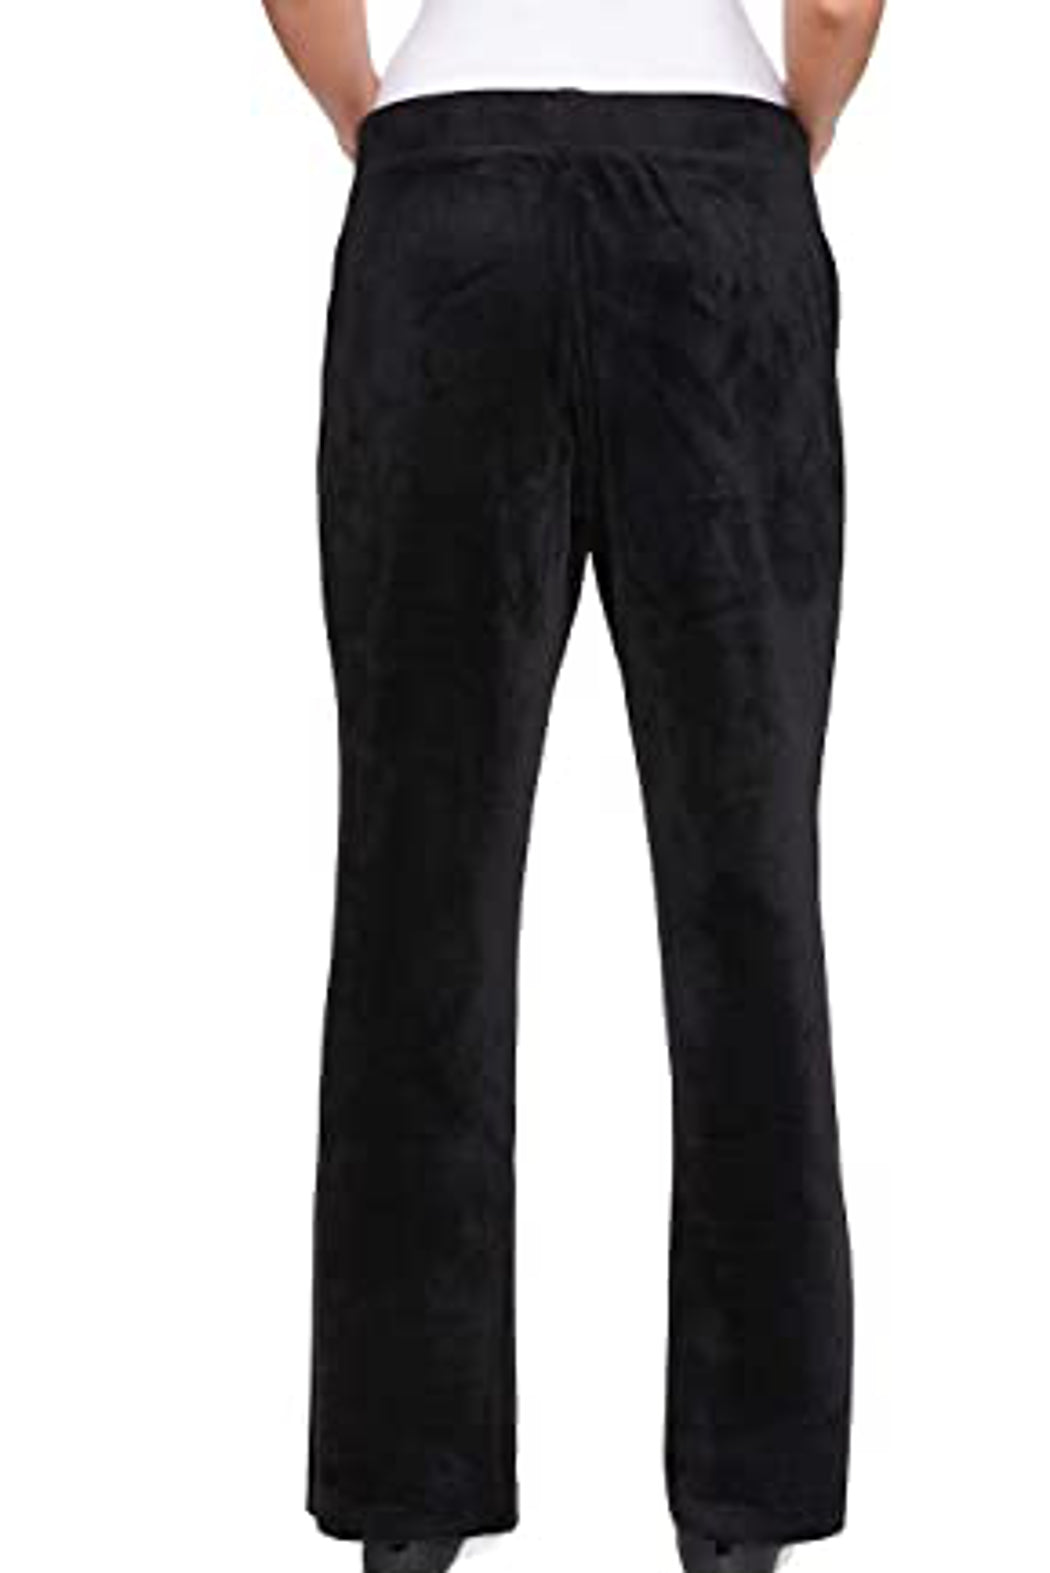 Gloria Vanderbilt Womens Jemma Ultra Soft Velour Pants